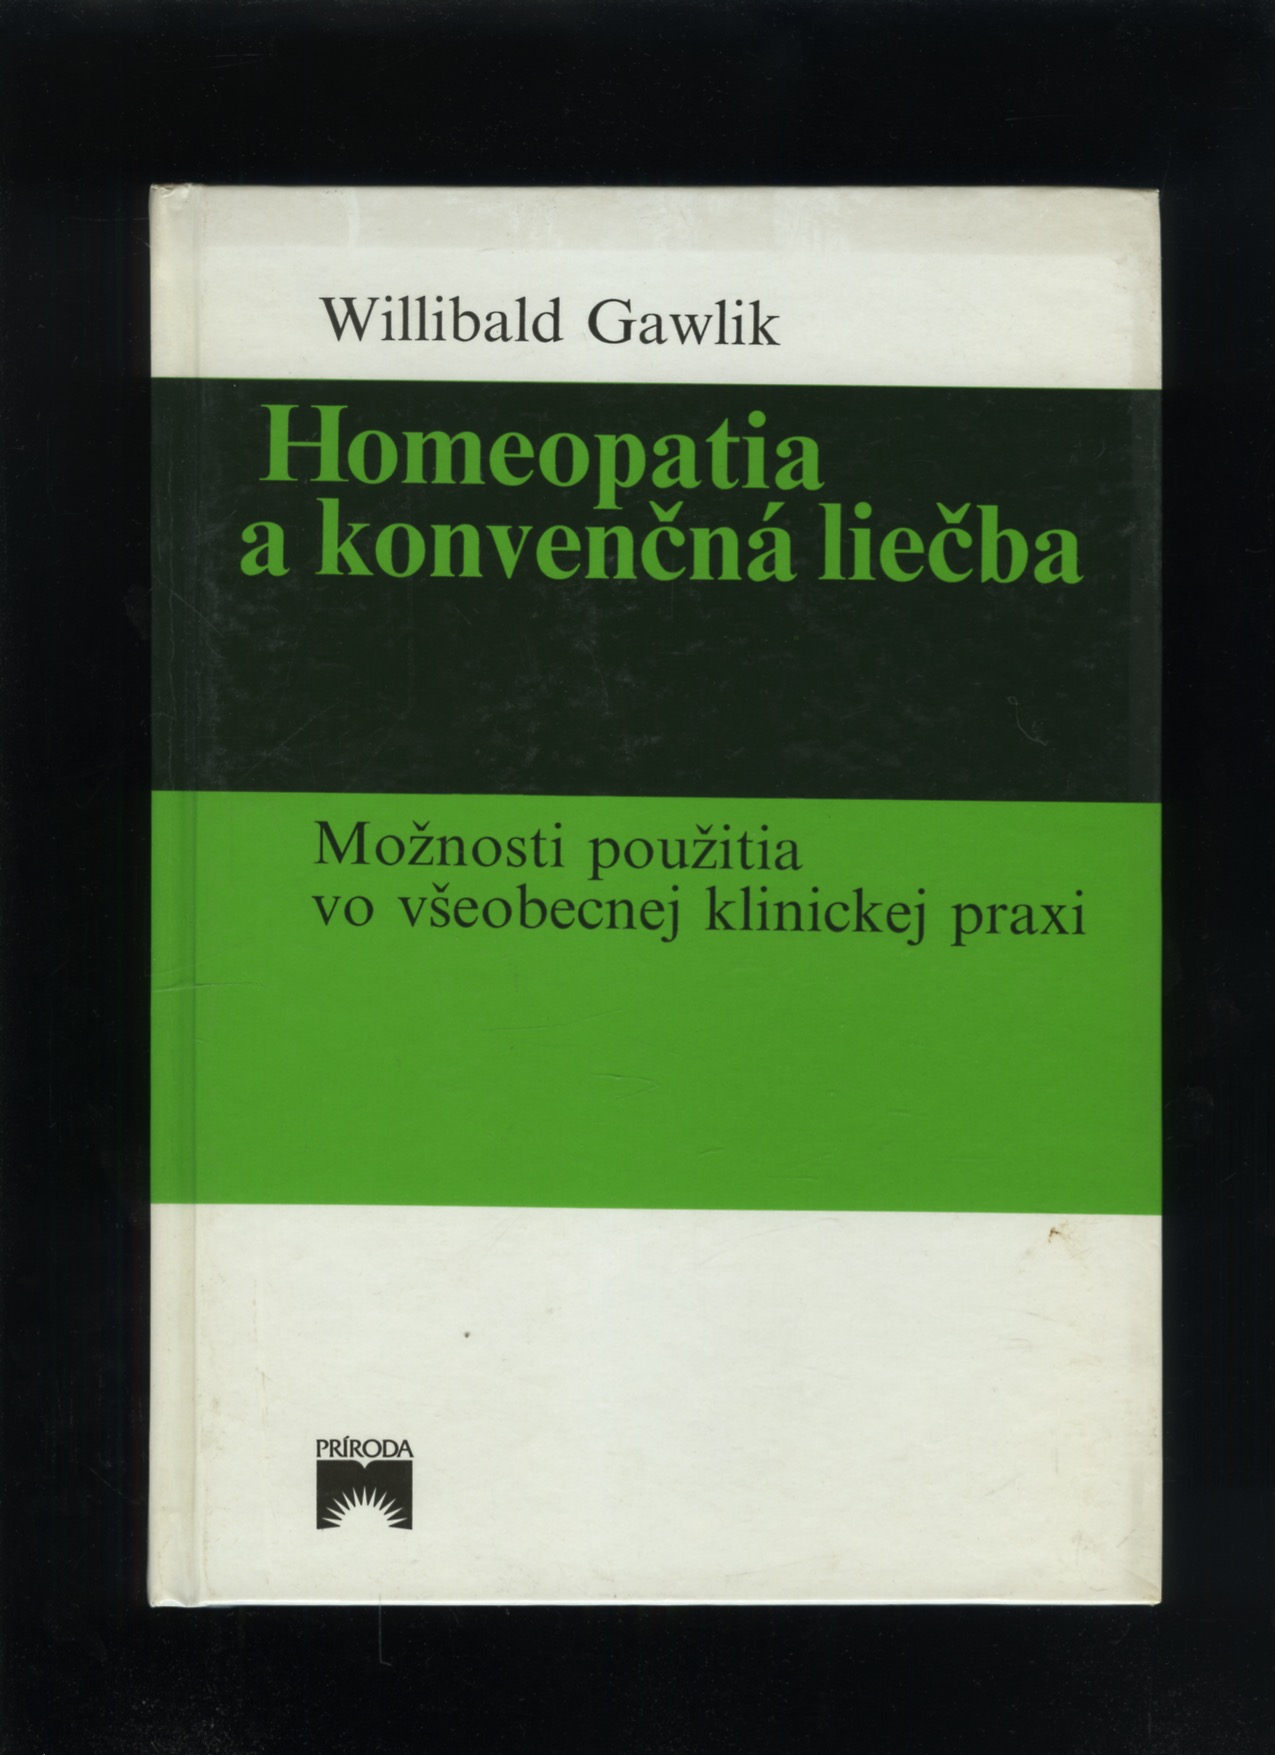 Homeopatia a konvenčná liečba (Willibald Gawlik)